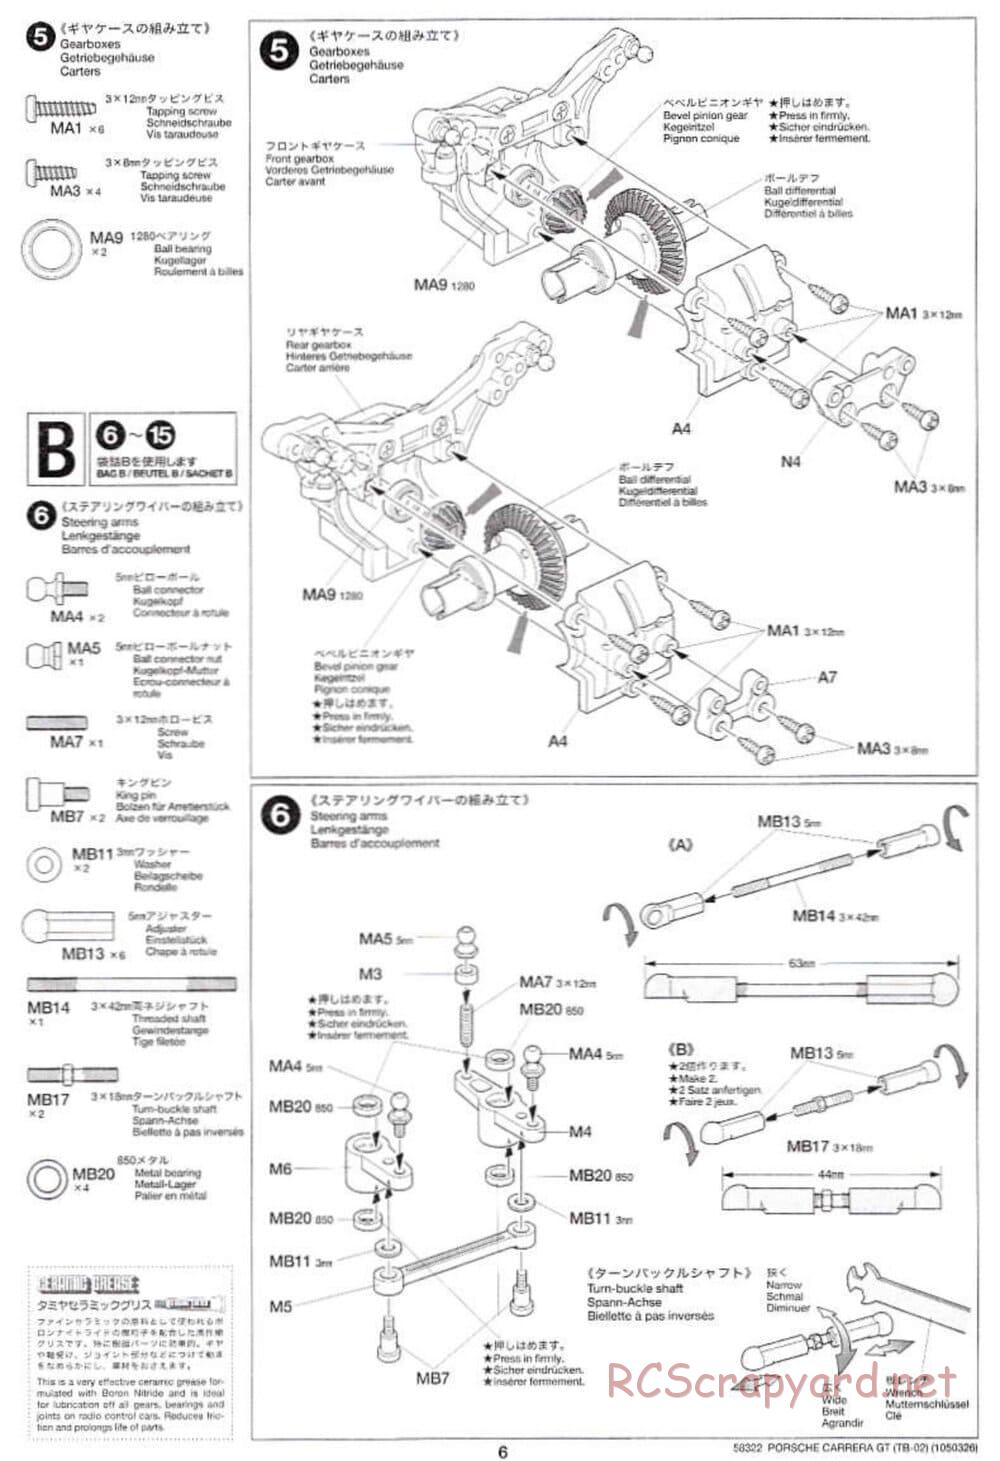 Tamiya - Porsche Carrera GT - TB-02 Chassis - Manual - Page 6